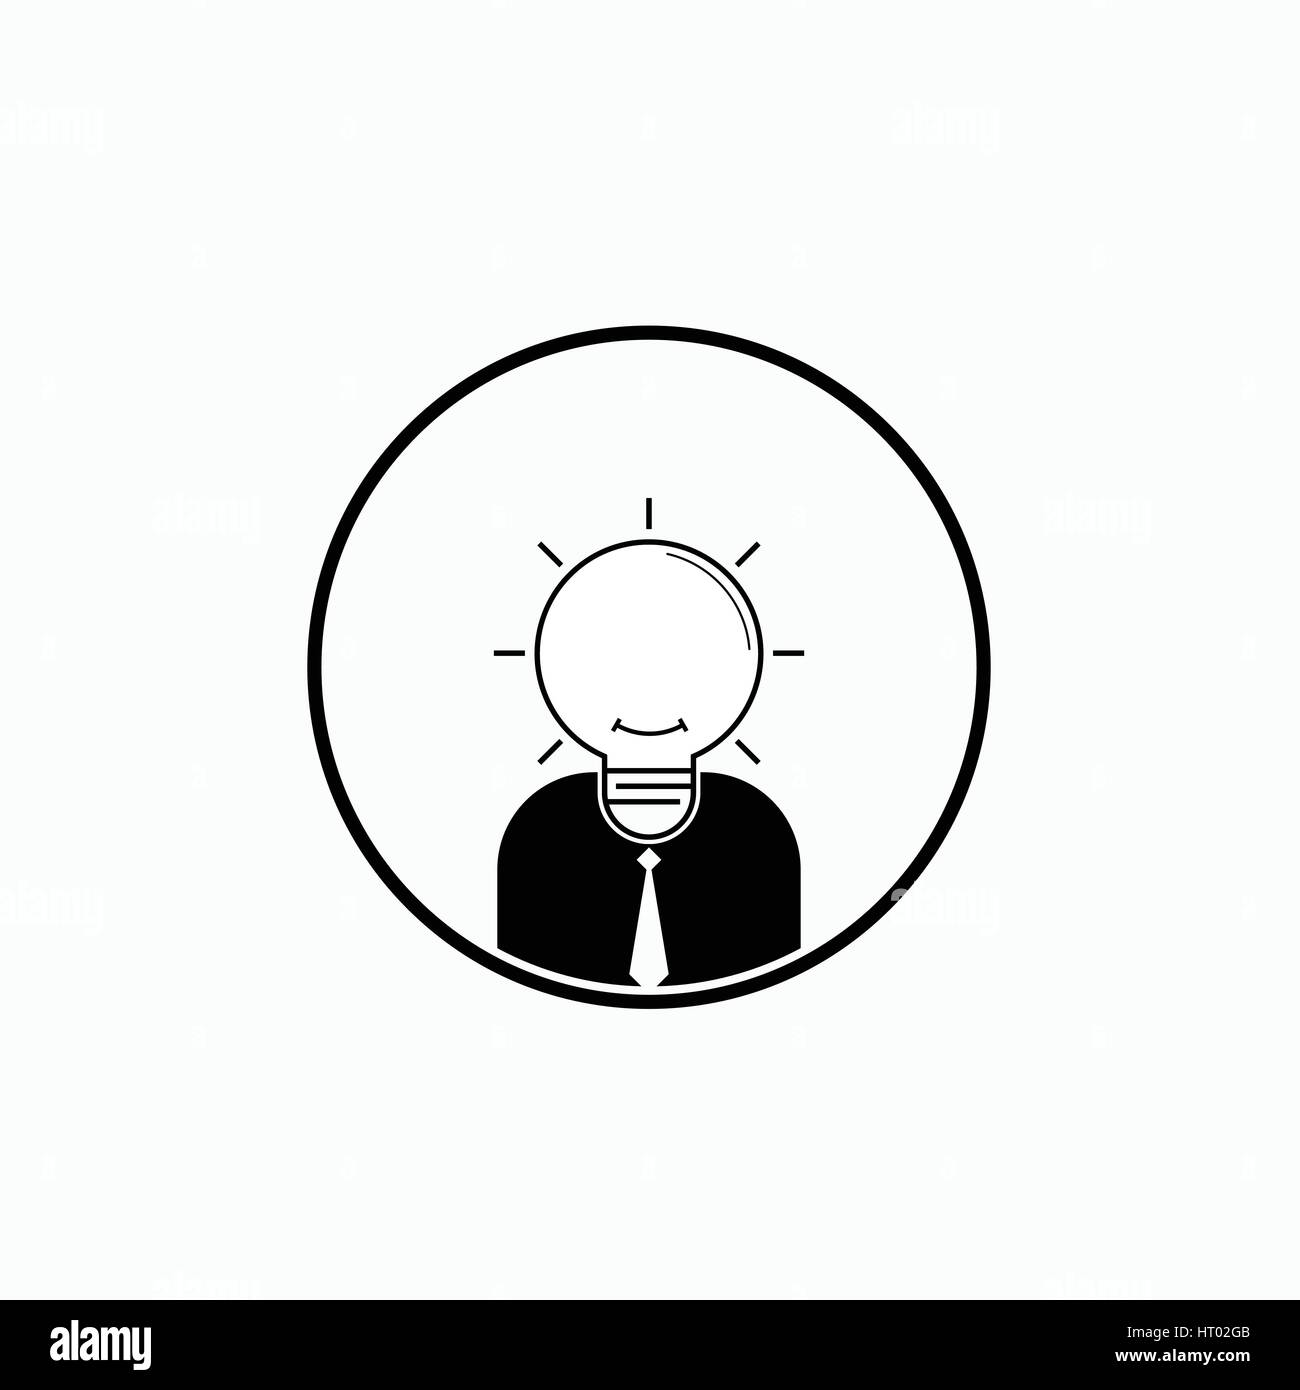 Business man logo with idea light bulb head concept.Brain power and great ideas.Vector illustration Stock Vector